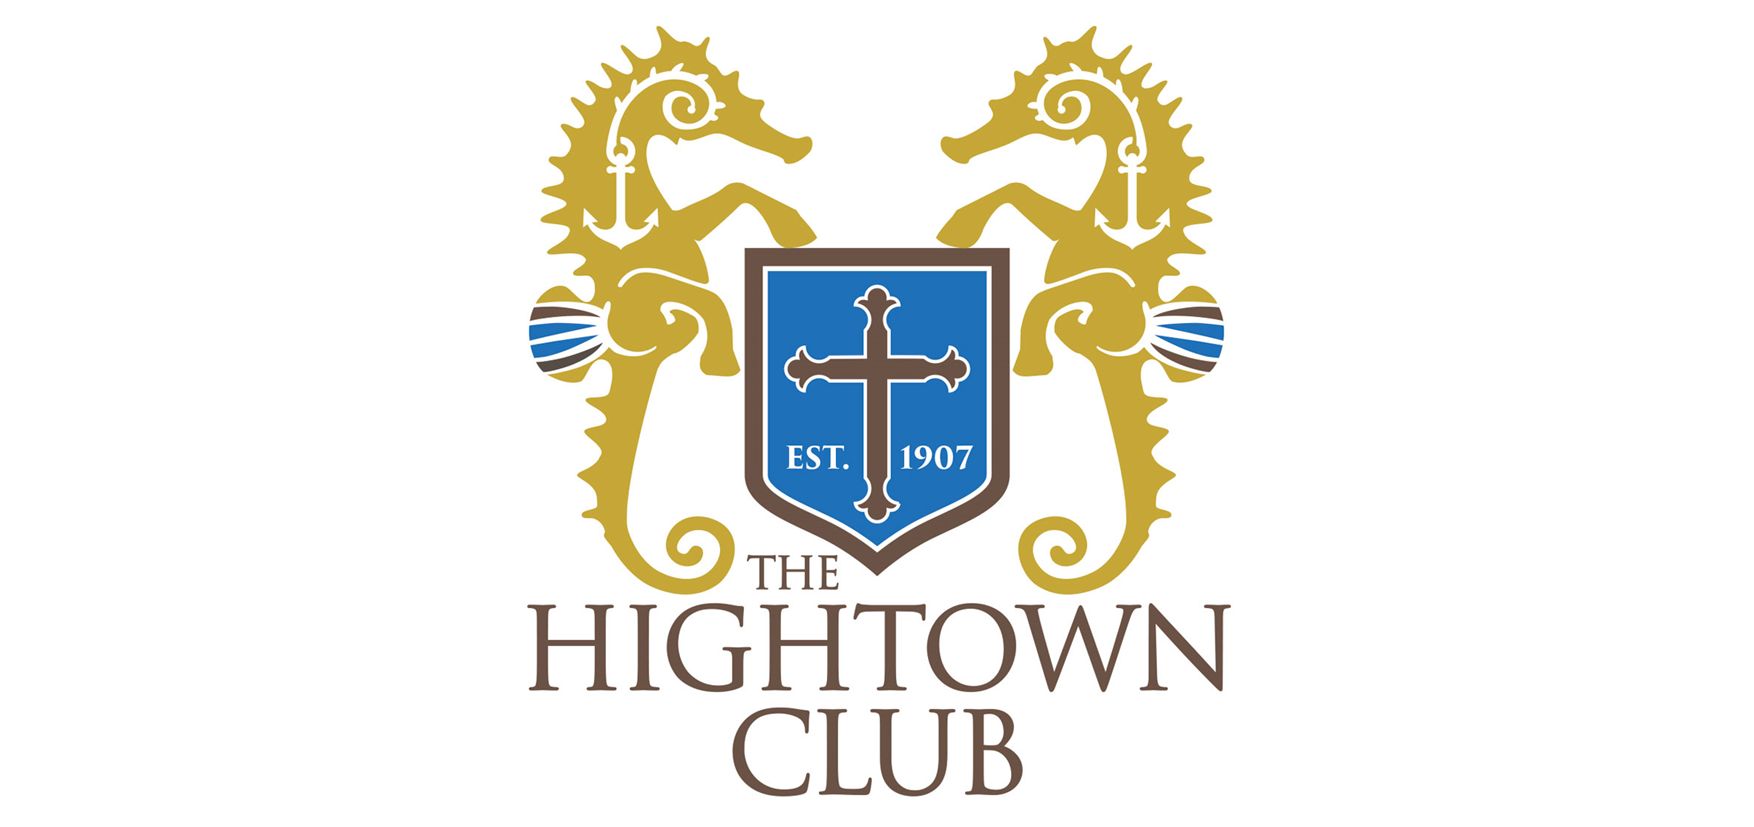 The Hightown Club (website)